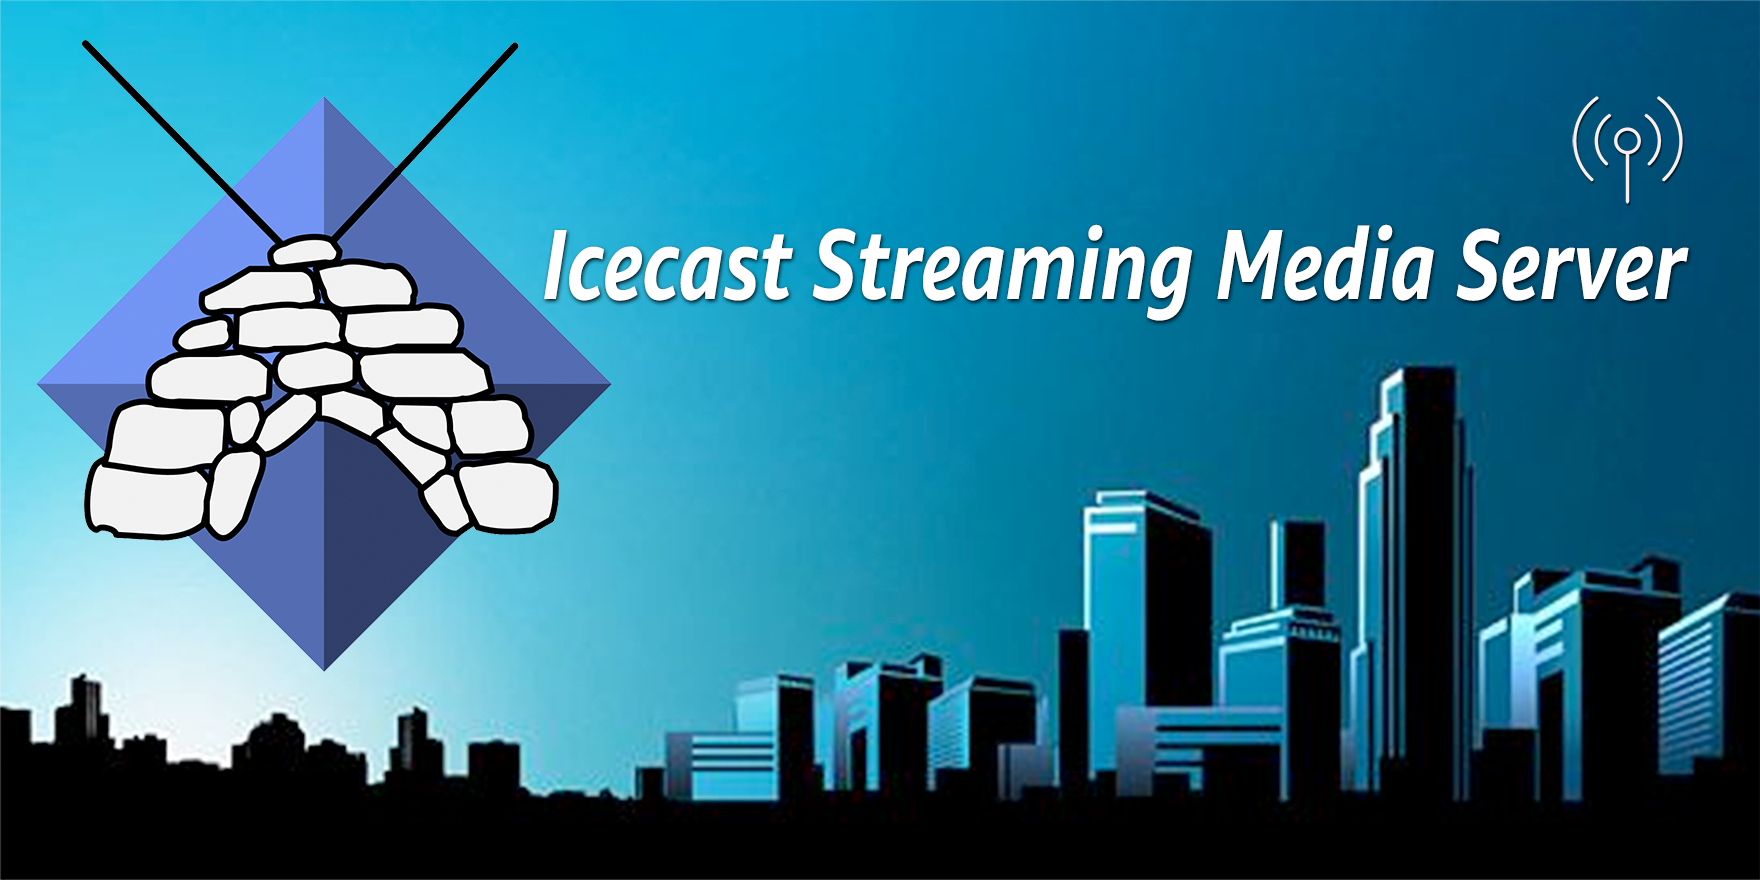 Icecast Streaming Media Server